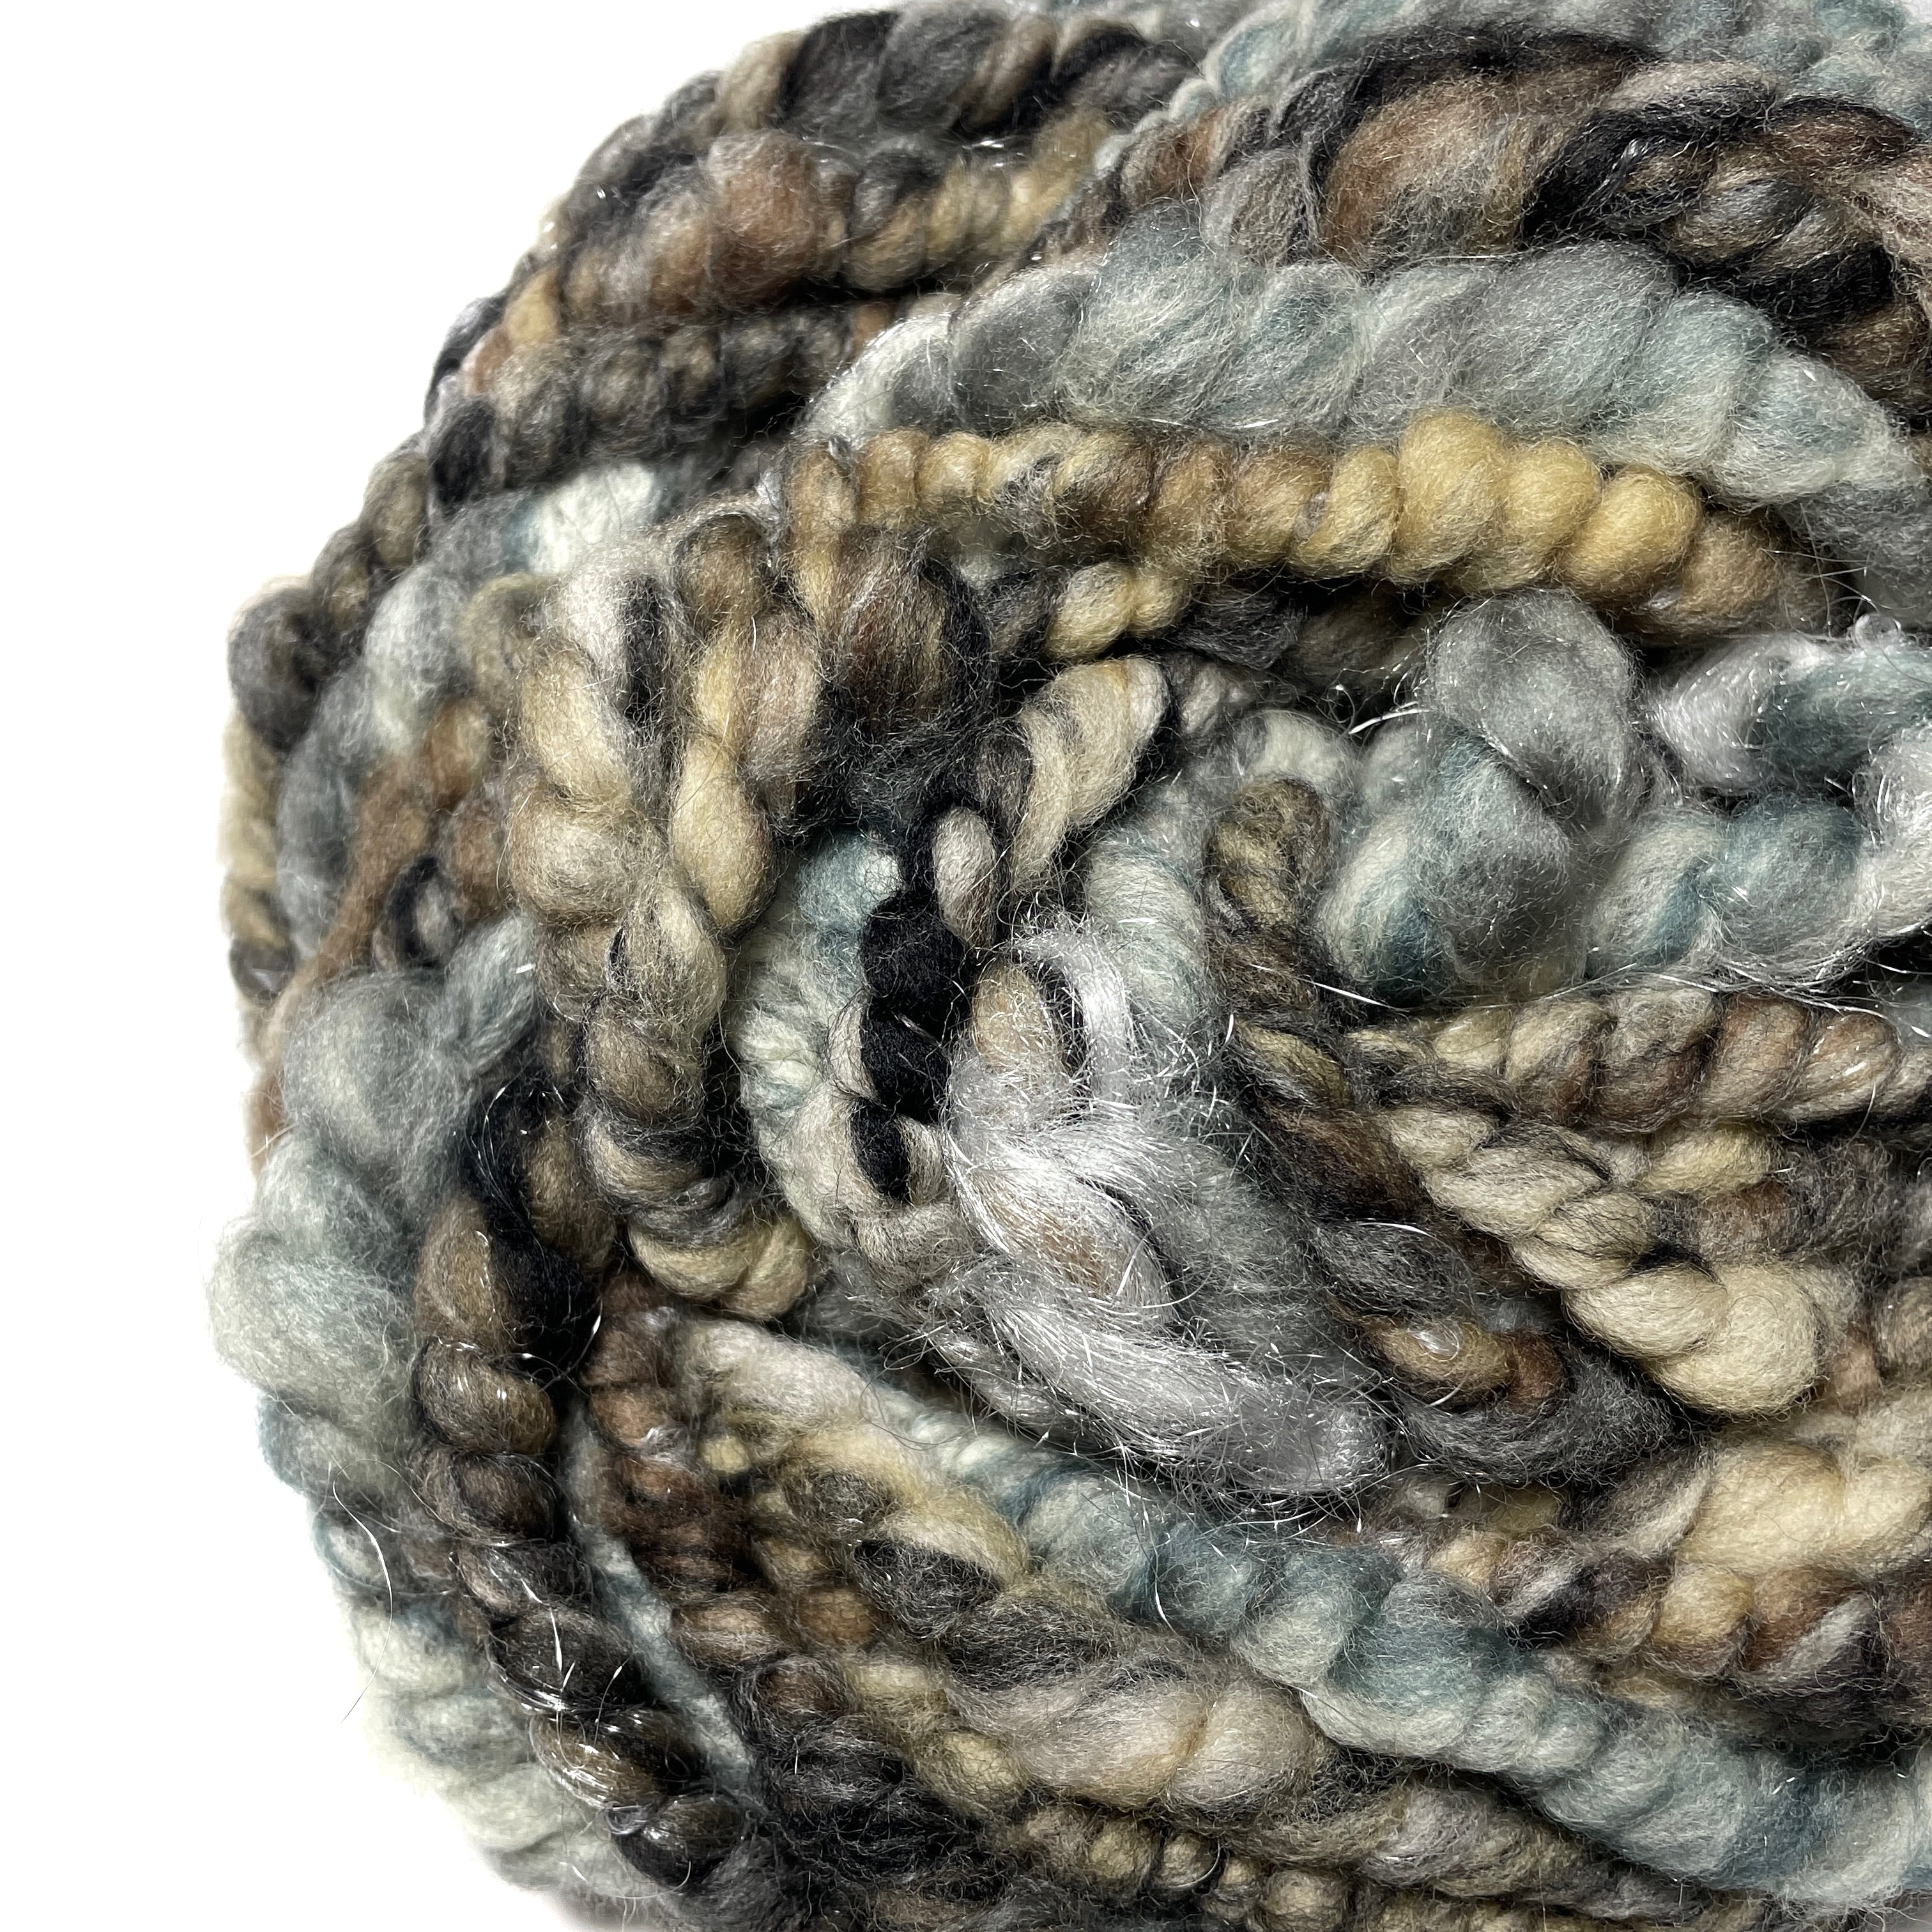 Drop yarn　-No.4 / 50g -